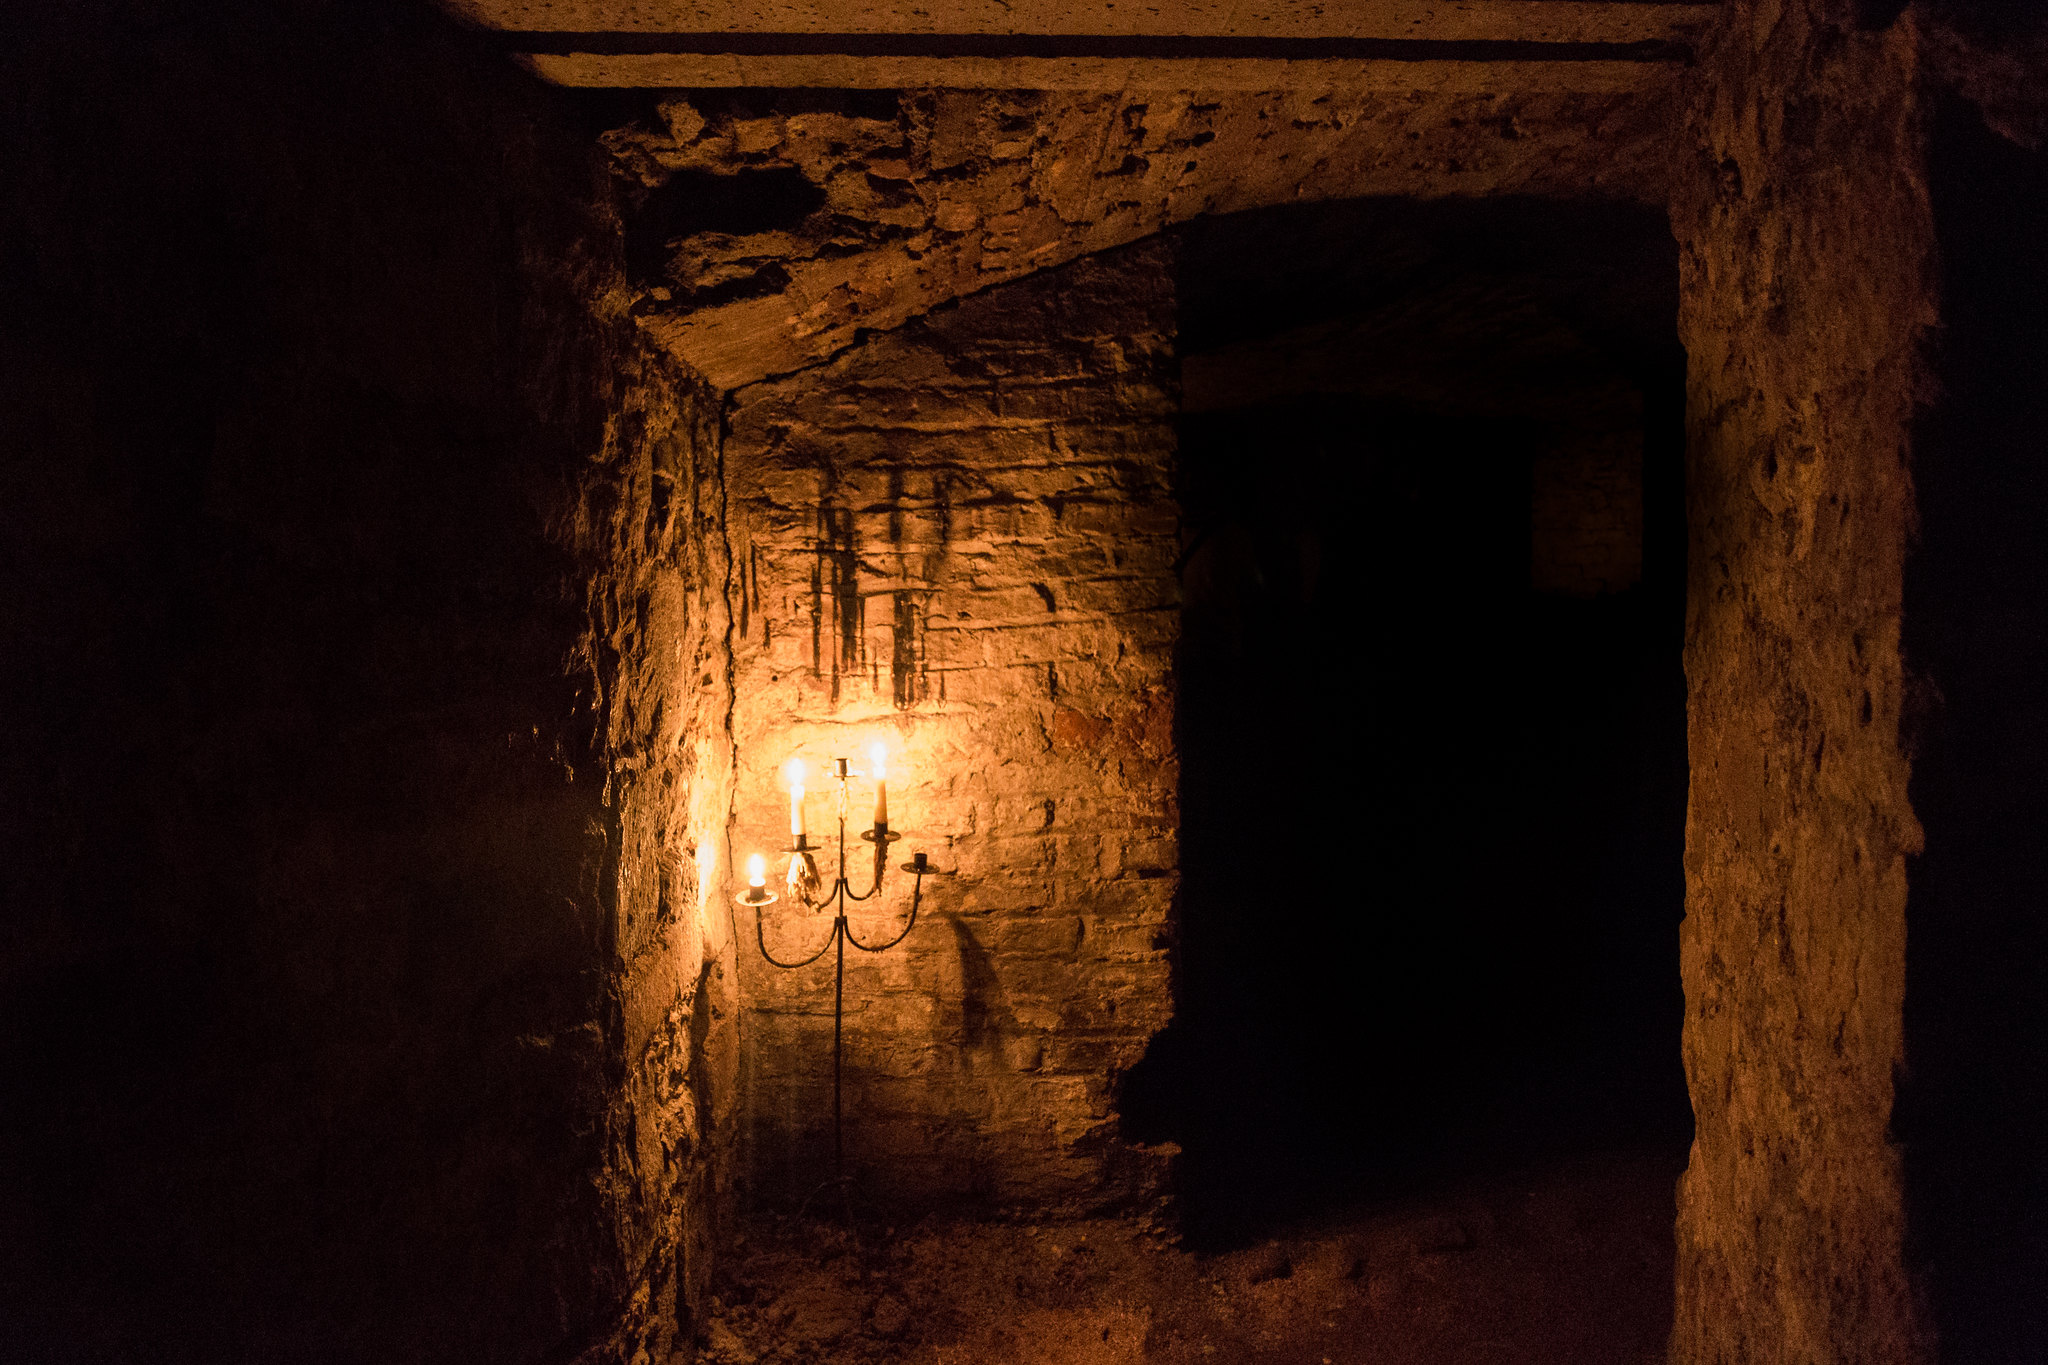 Edinburgh Vaults - Fw42 - Flickr